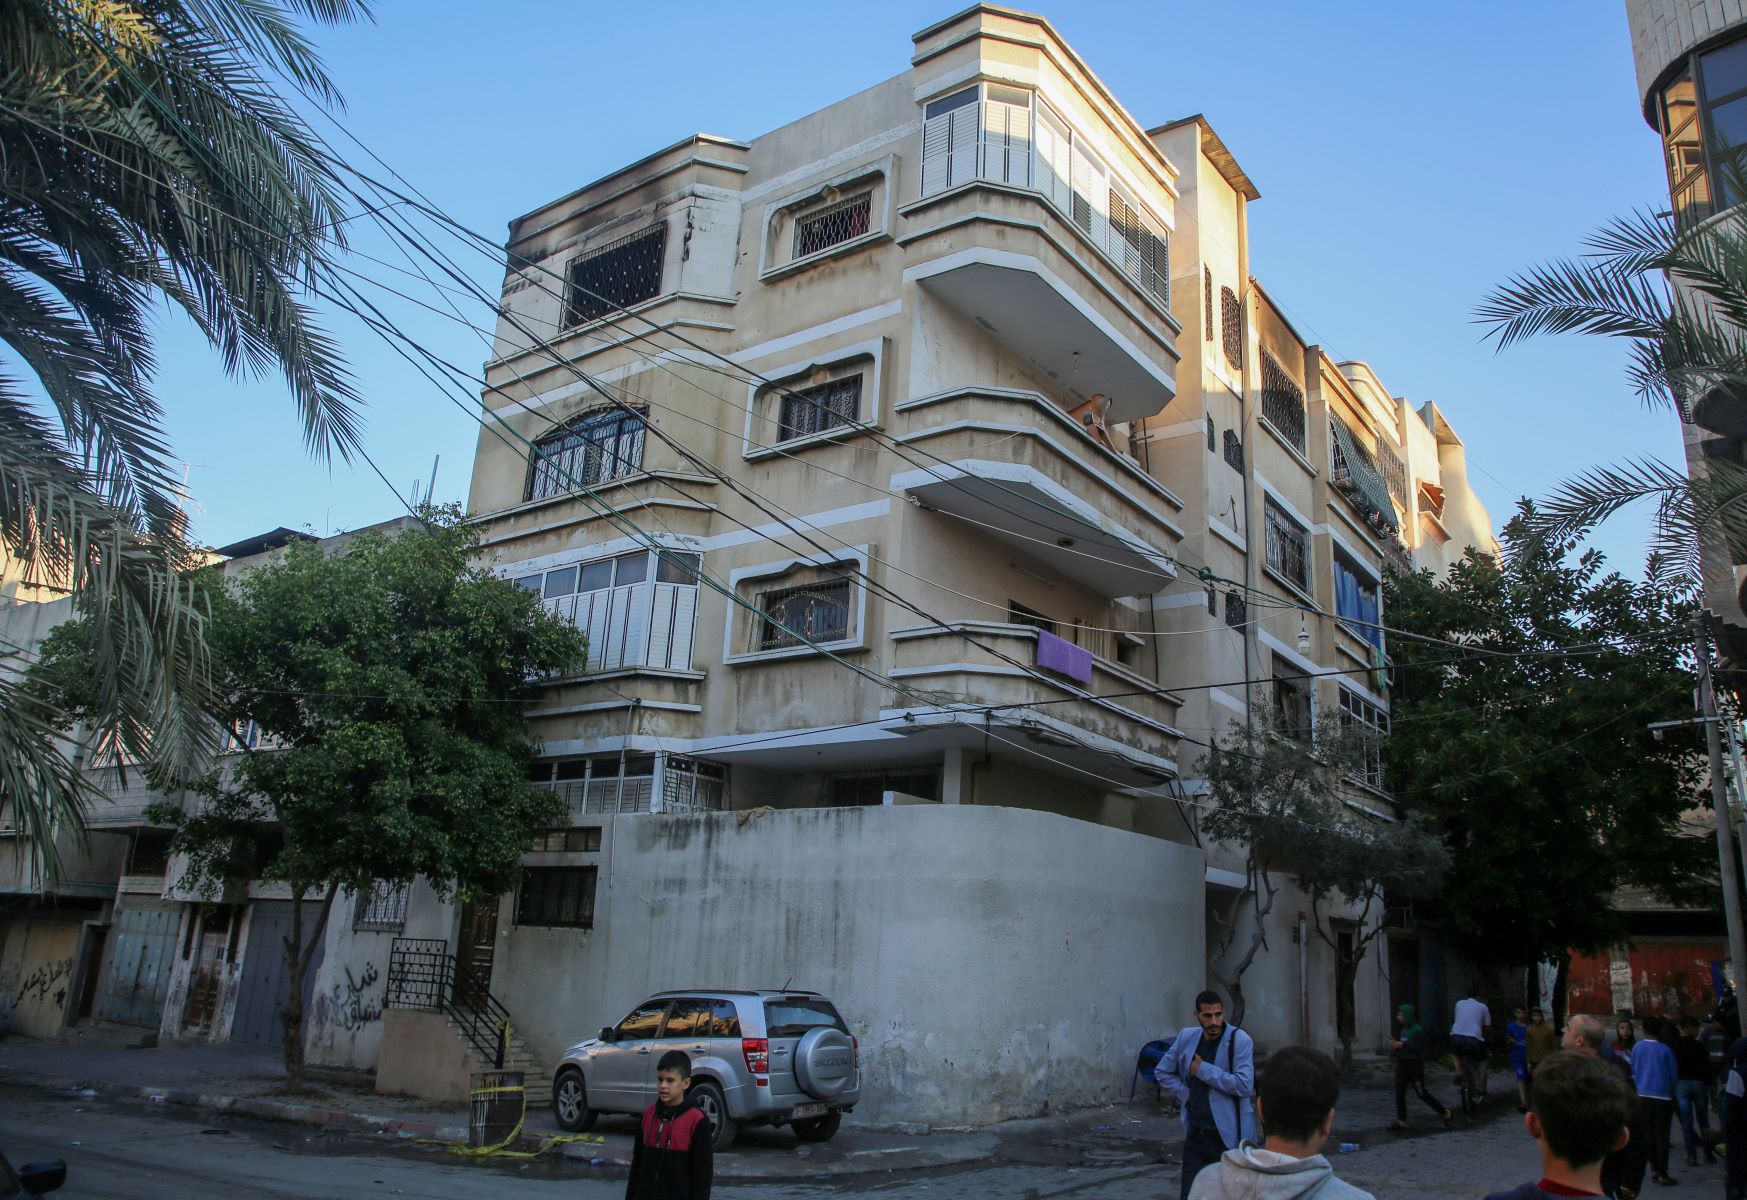 The house where the fire broke out, killing dozens (MEE/Maha Husseini)